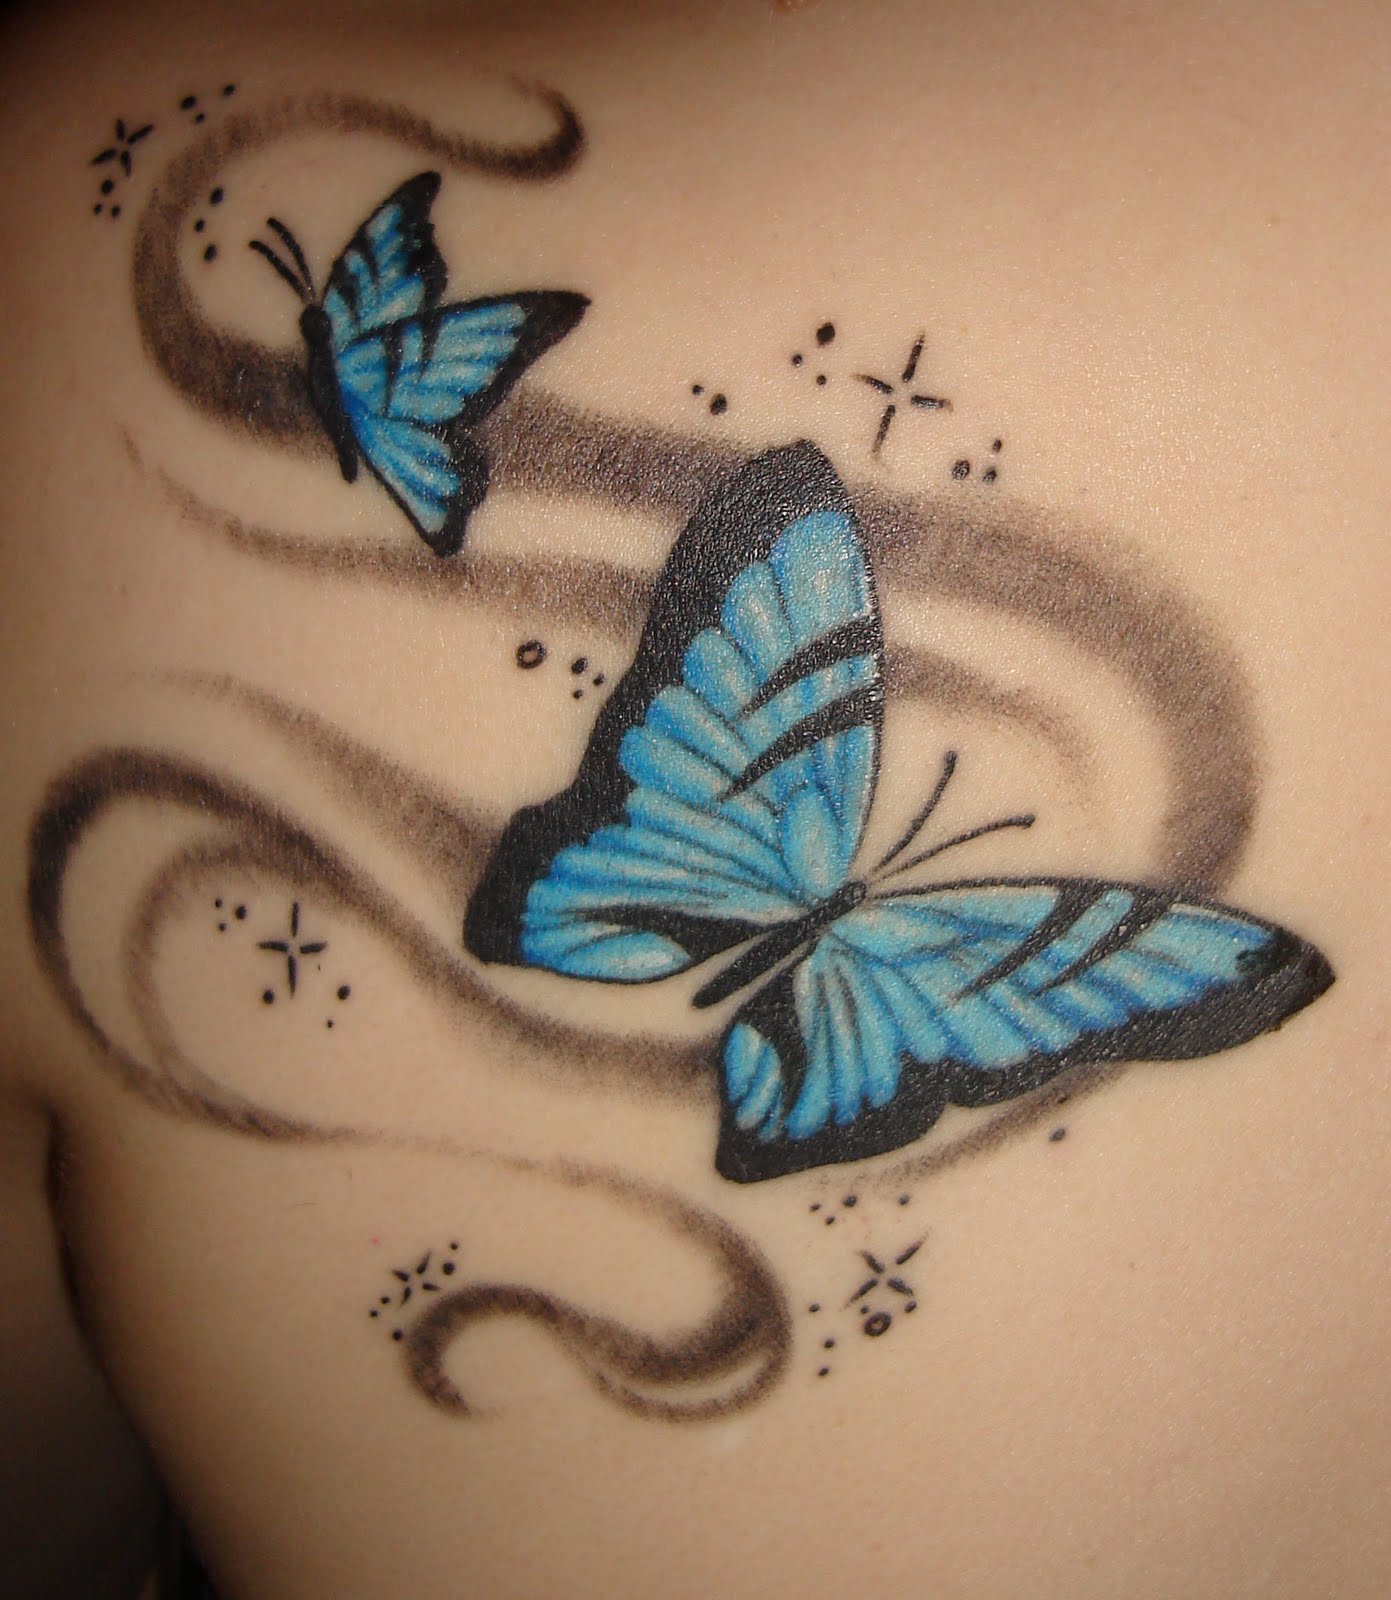 http://3.bp.blogspot.com/-W4NtFLtaXXk/TaiiLENShqI/AAAAAAAAADQ/oLxmjrte4lU/s1600/blue_butterfly_tattoo_by_KarateKid89.jpg